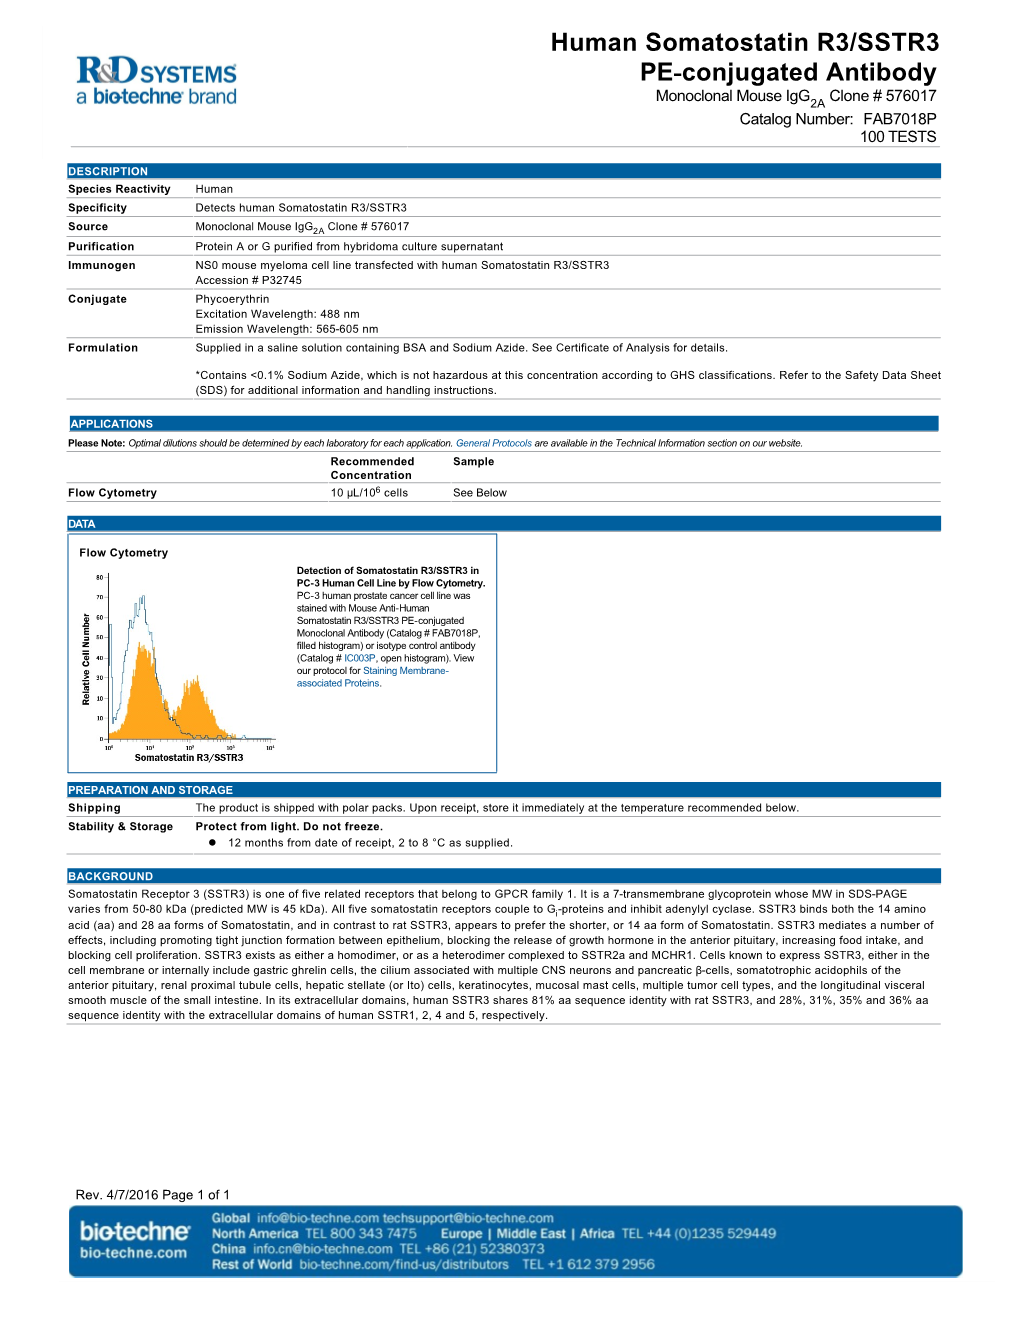 Human Somatostatin R3/SSTR3 PE-Conjugated Antibody